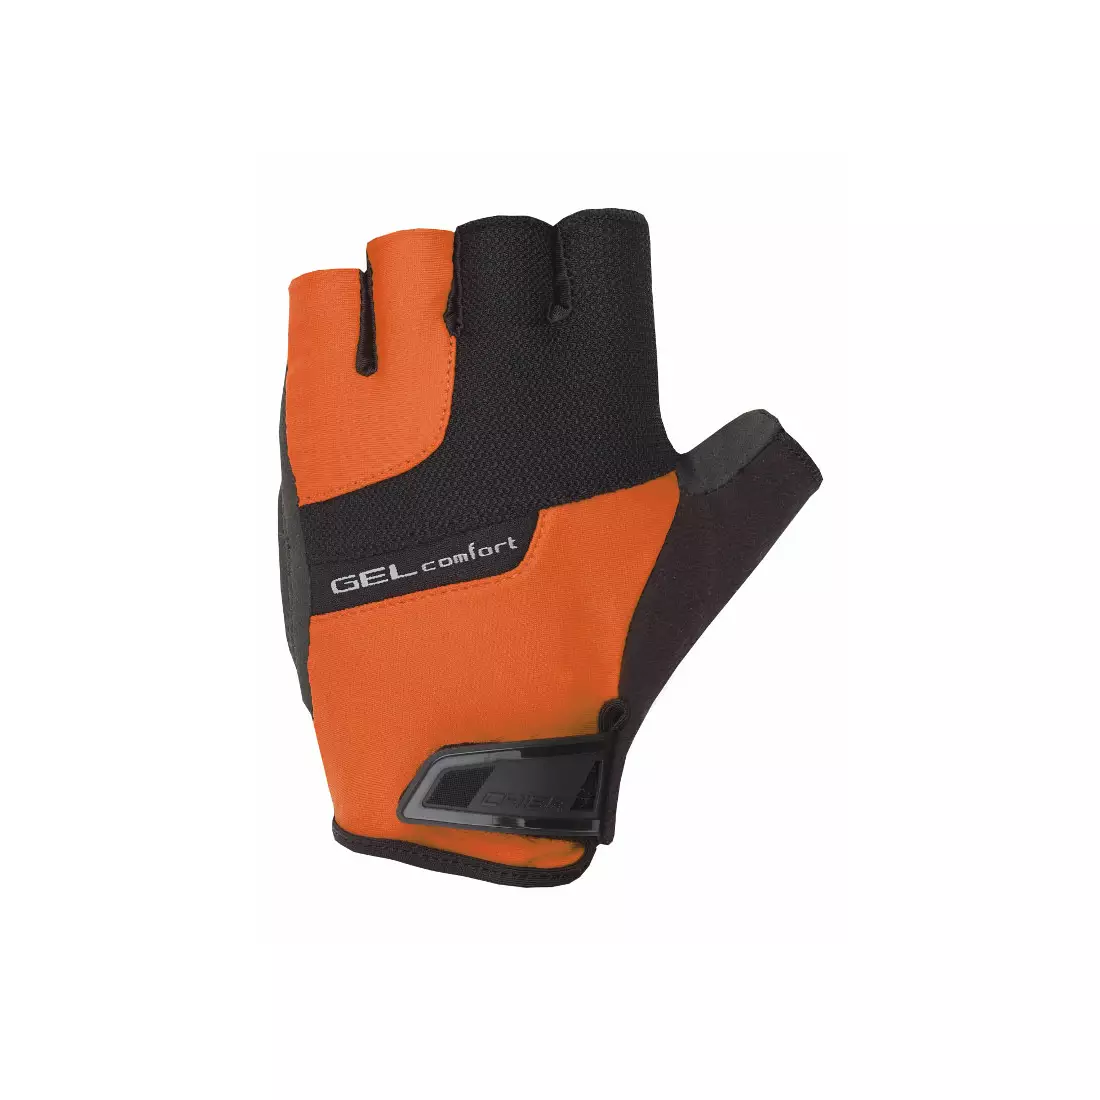 CHIBA GEL COMFORT cycling gloves, orange, 3040518